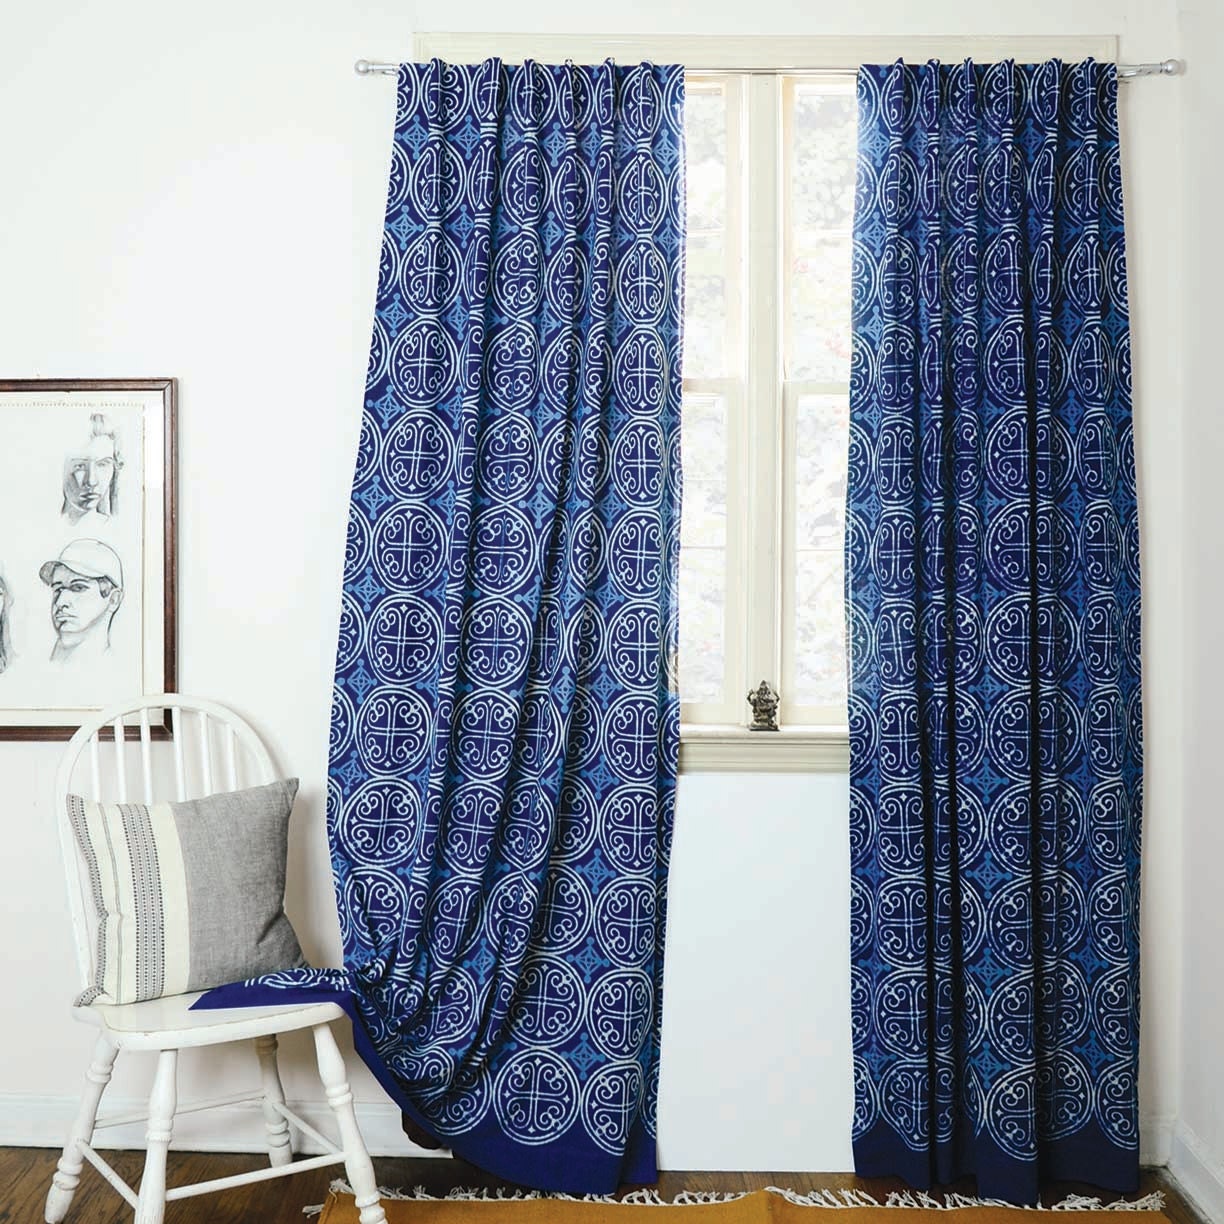 Indigo curtains Blue curtains window treatment bedroom by Ichcha